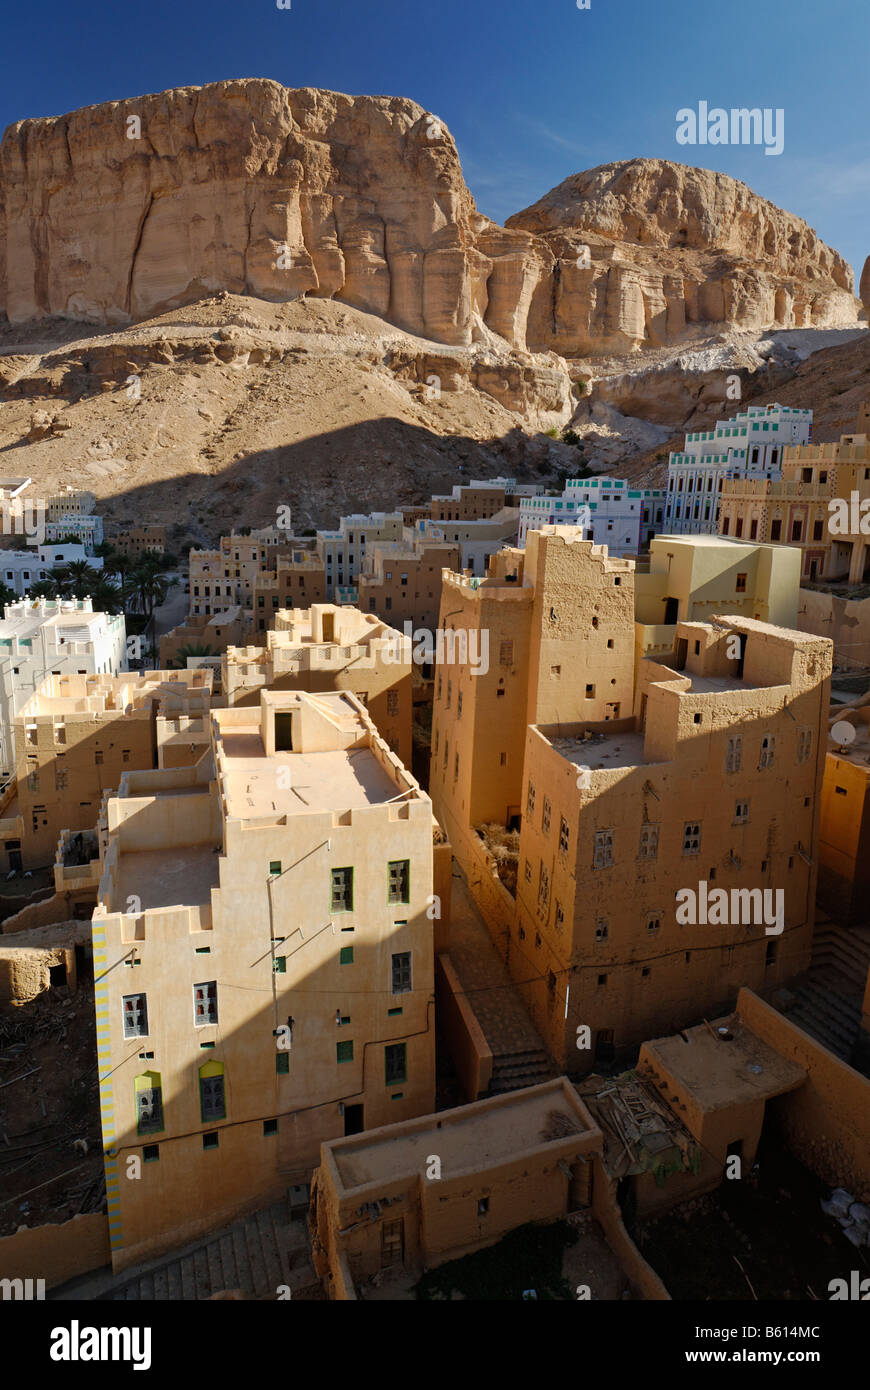 Town of Khaylla, Khaylah, Wadi Doan, Wadi Hadramaut, Yemen, Arabia, the Middle East Stock Photo